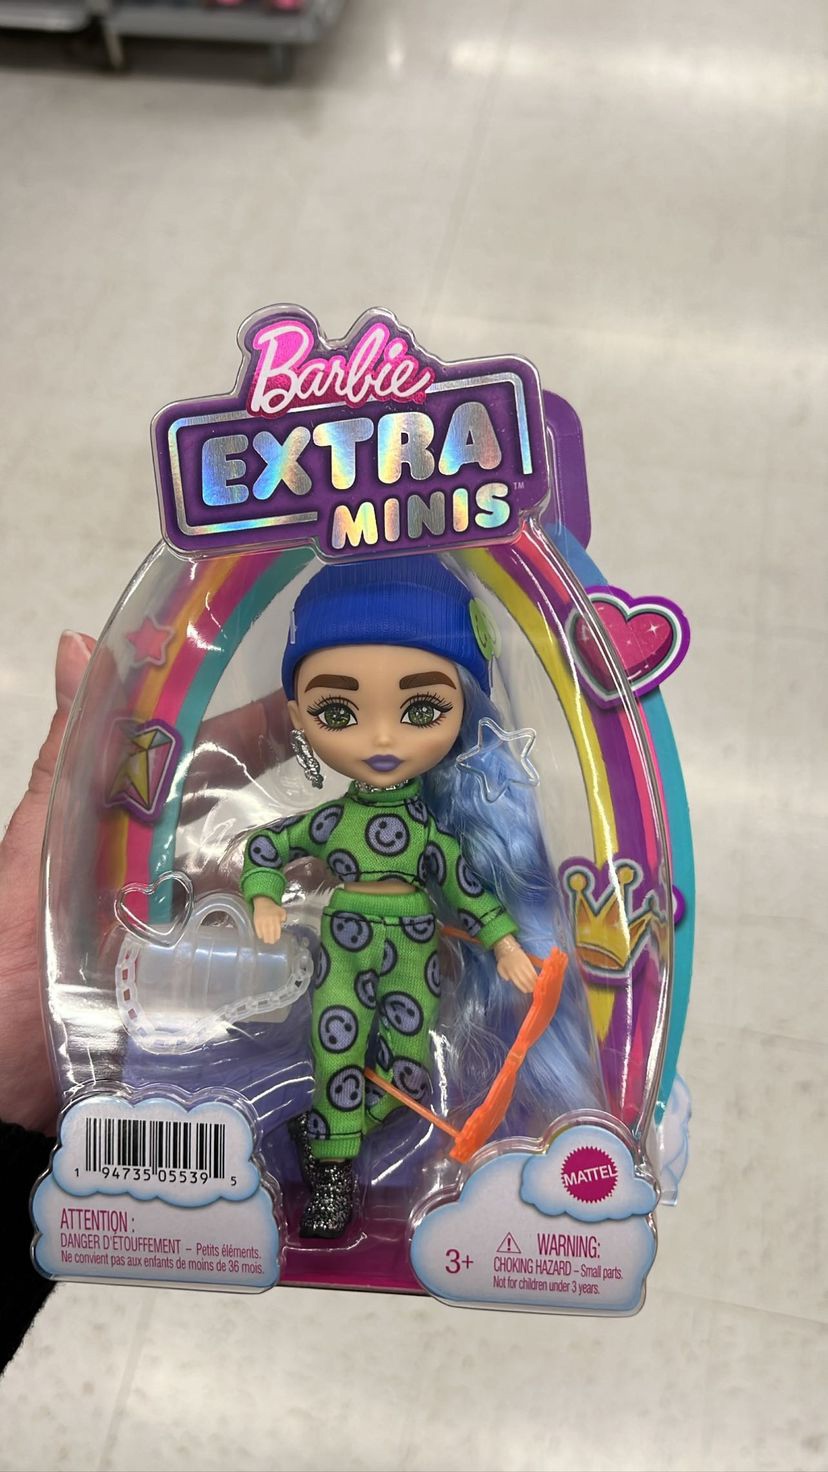 Barbie Extra minis